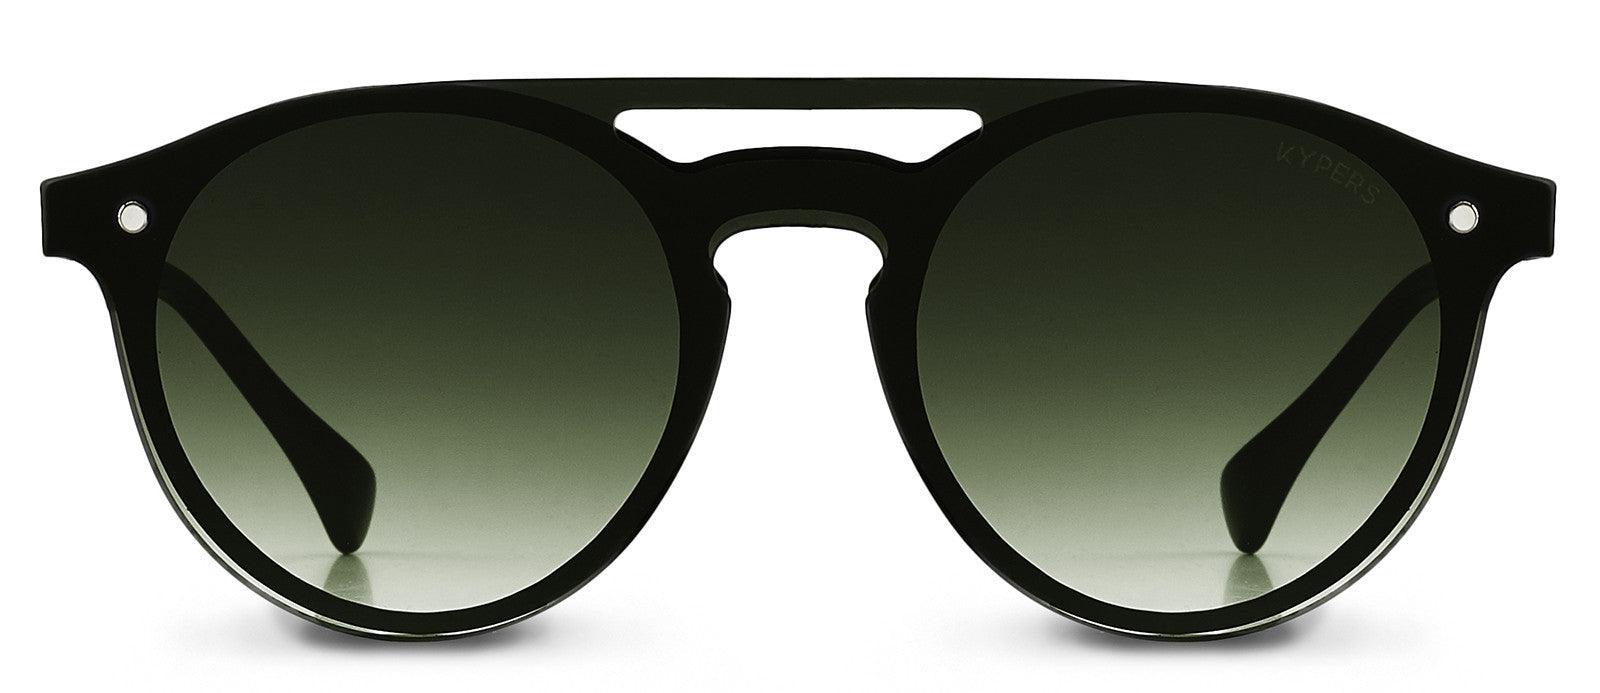 KYPERS sunglasses model GERI GR007 with black frame and pink mirror lens